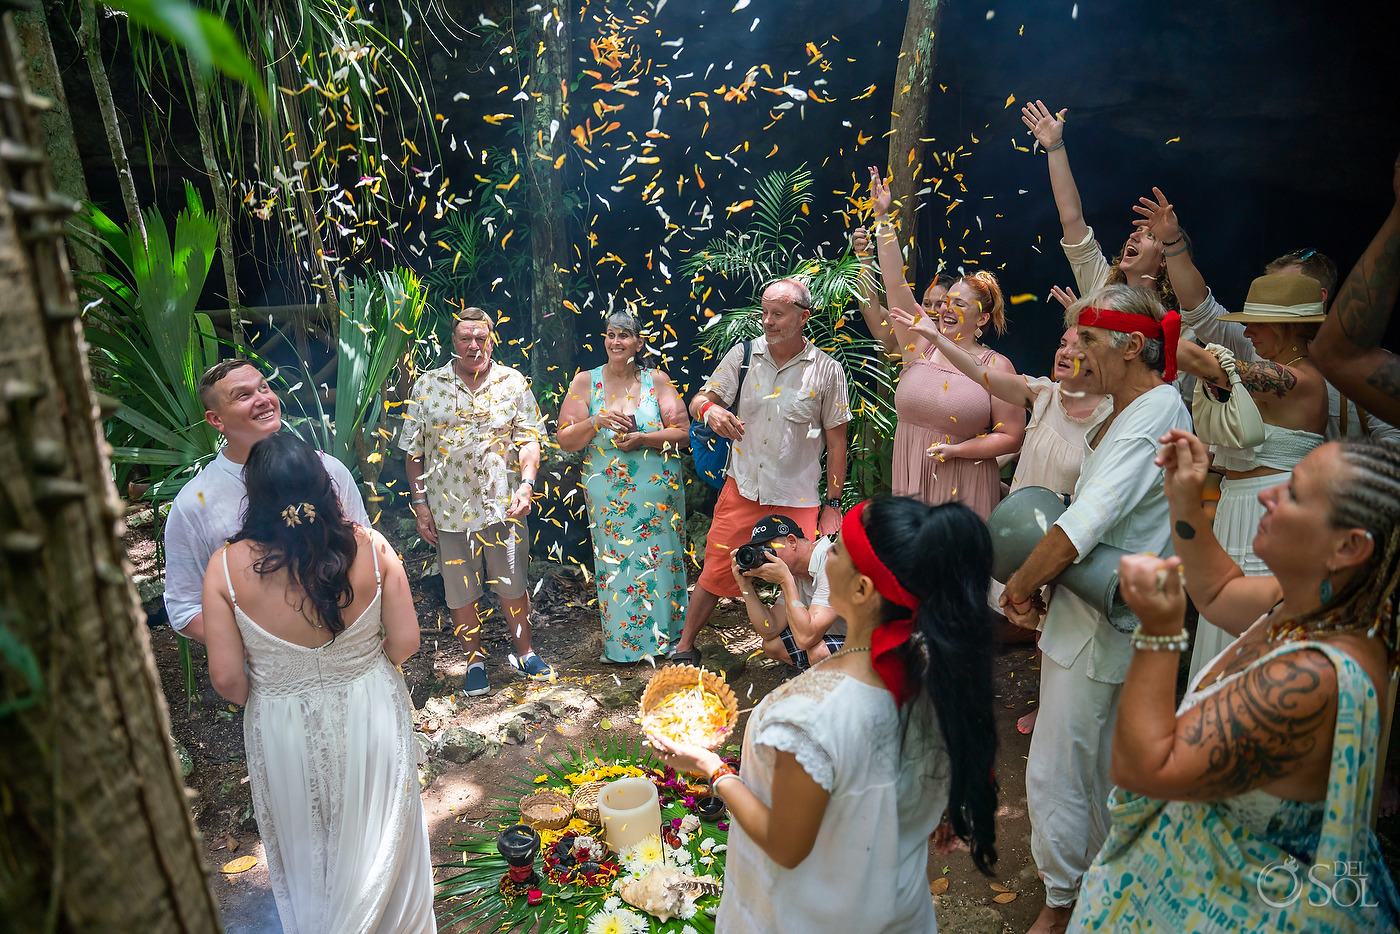 Mexico Cenote Micro Ceremony family celebration with flower petals